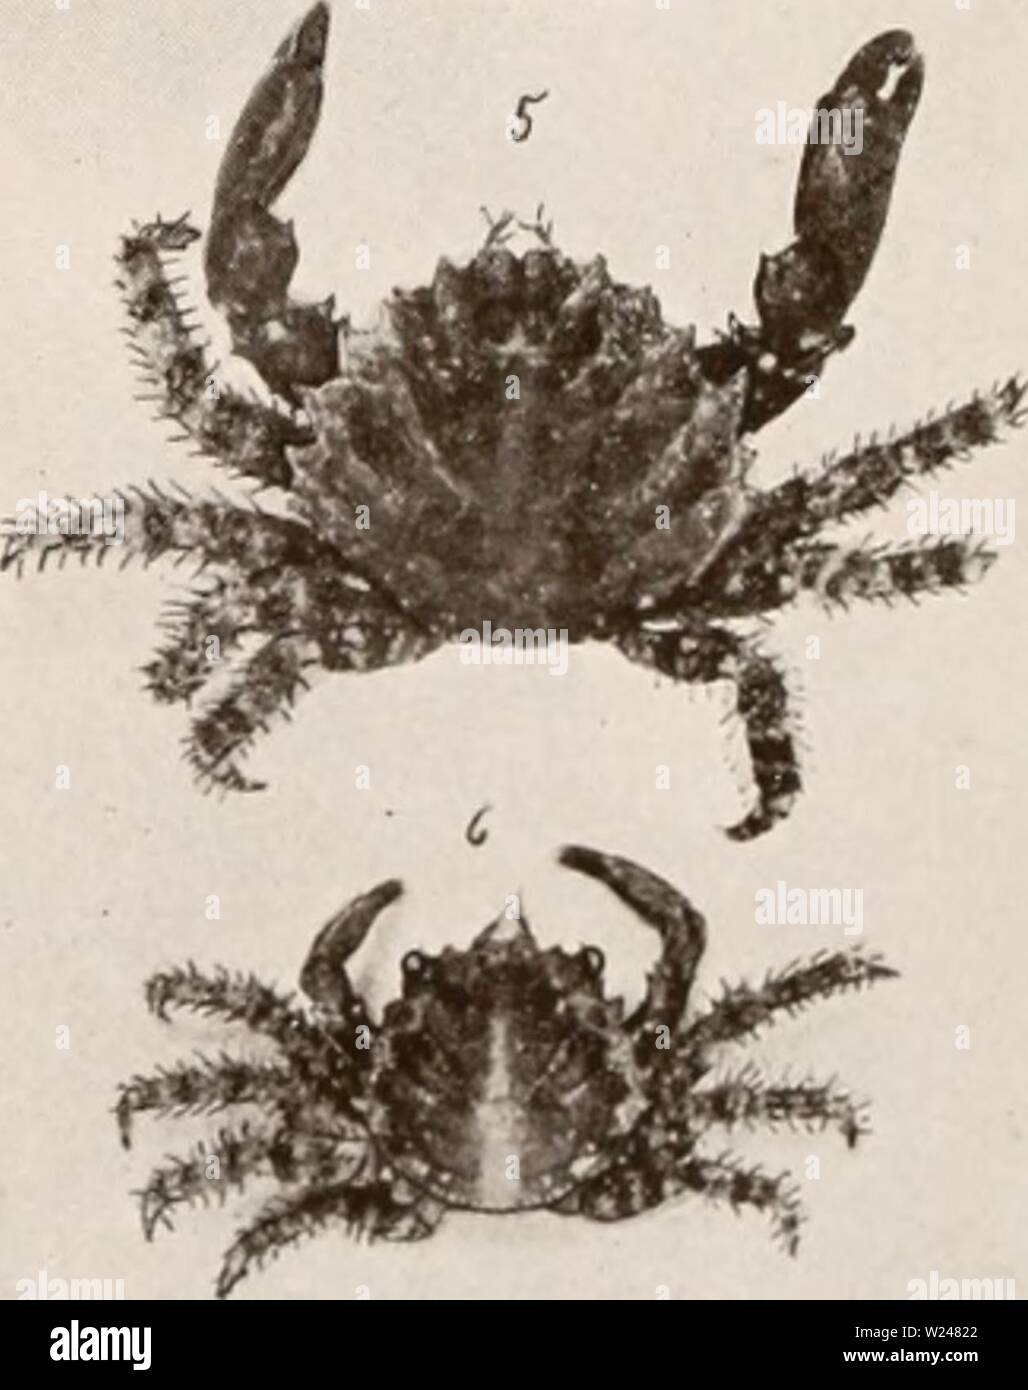 Archive image from page 214 of Decapod crustacea of Bermuda (1908-1922). Decapod crustacea of Bermuda  decapodcrustacea00verr Year: 1908-1922  . Epialtus bititberculatus; '2. MHIim.r hisi&gt;i. Chon'mm )u-rs; 4, o, 6. Mithrax ts, li irs u t i})es. Stock Photo